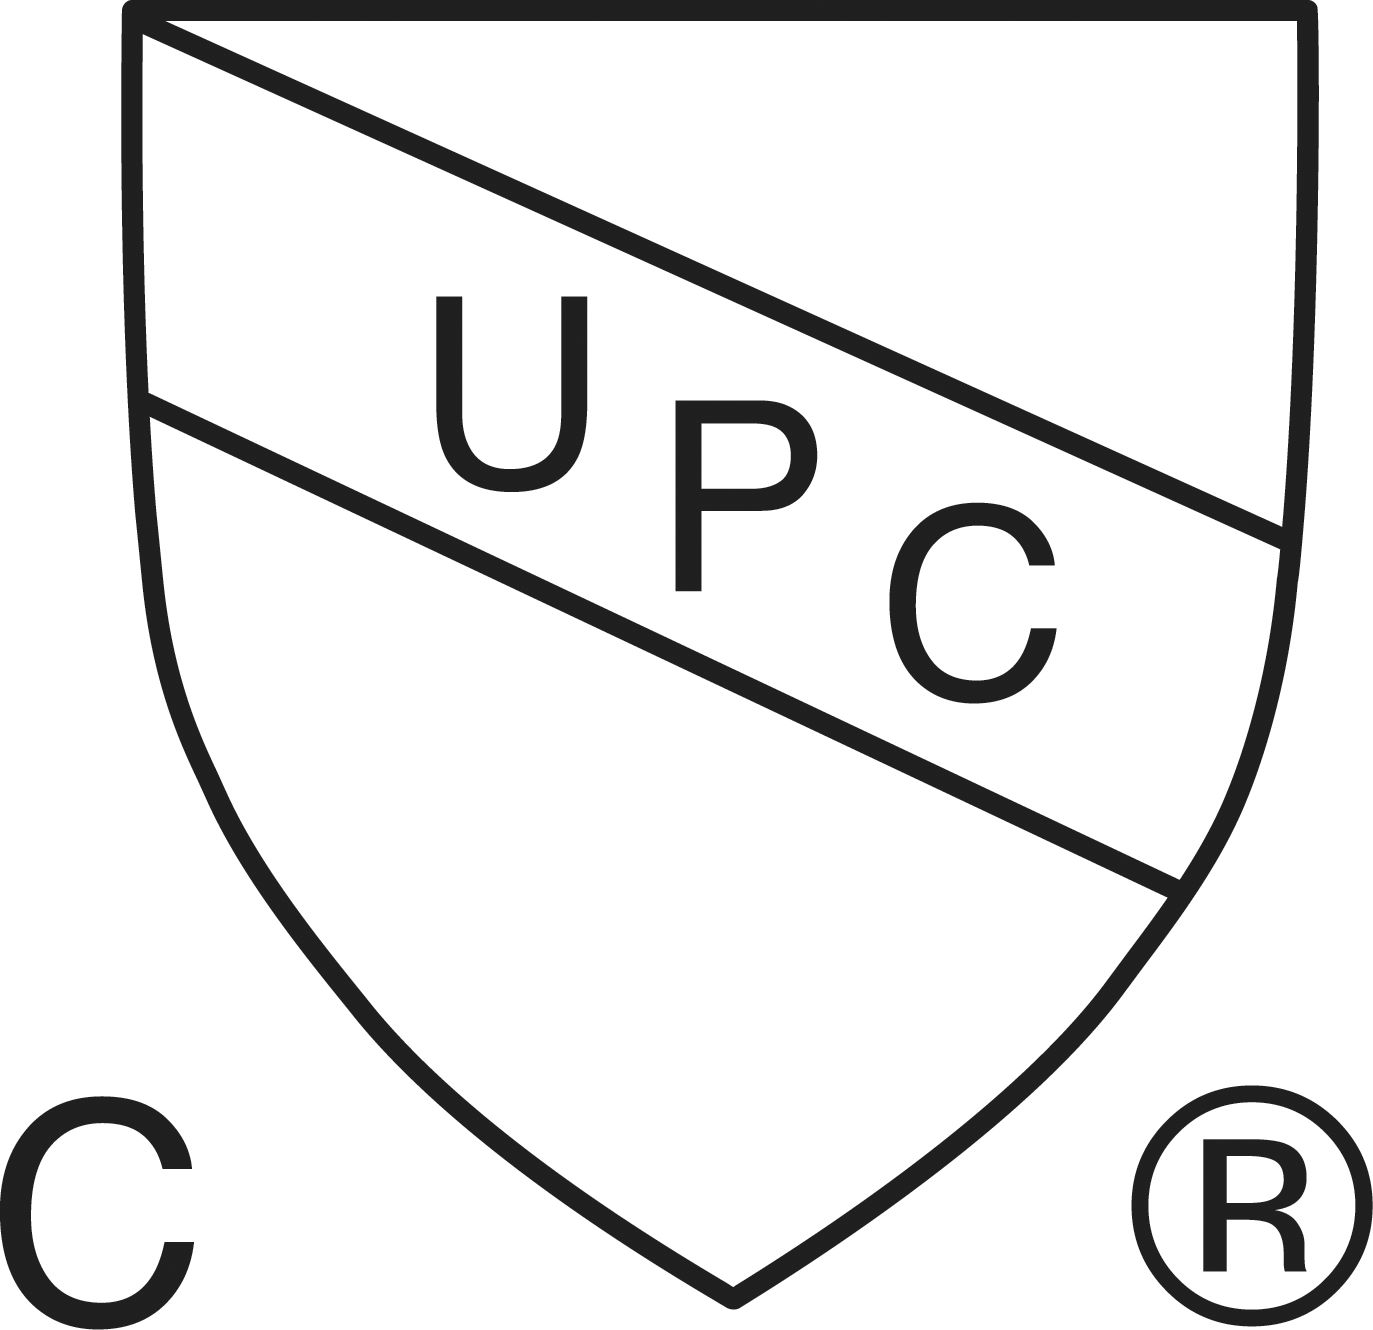 cUPC logo jpg